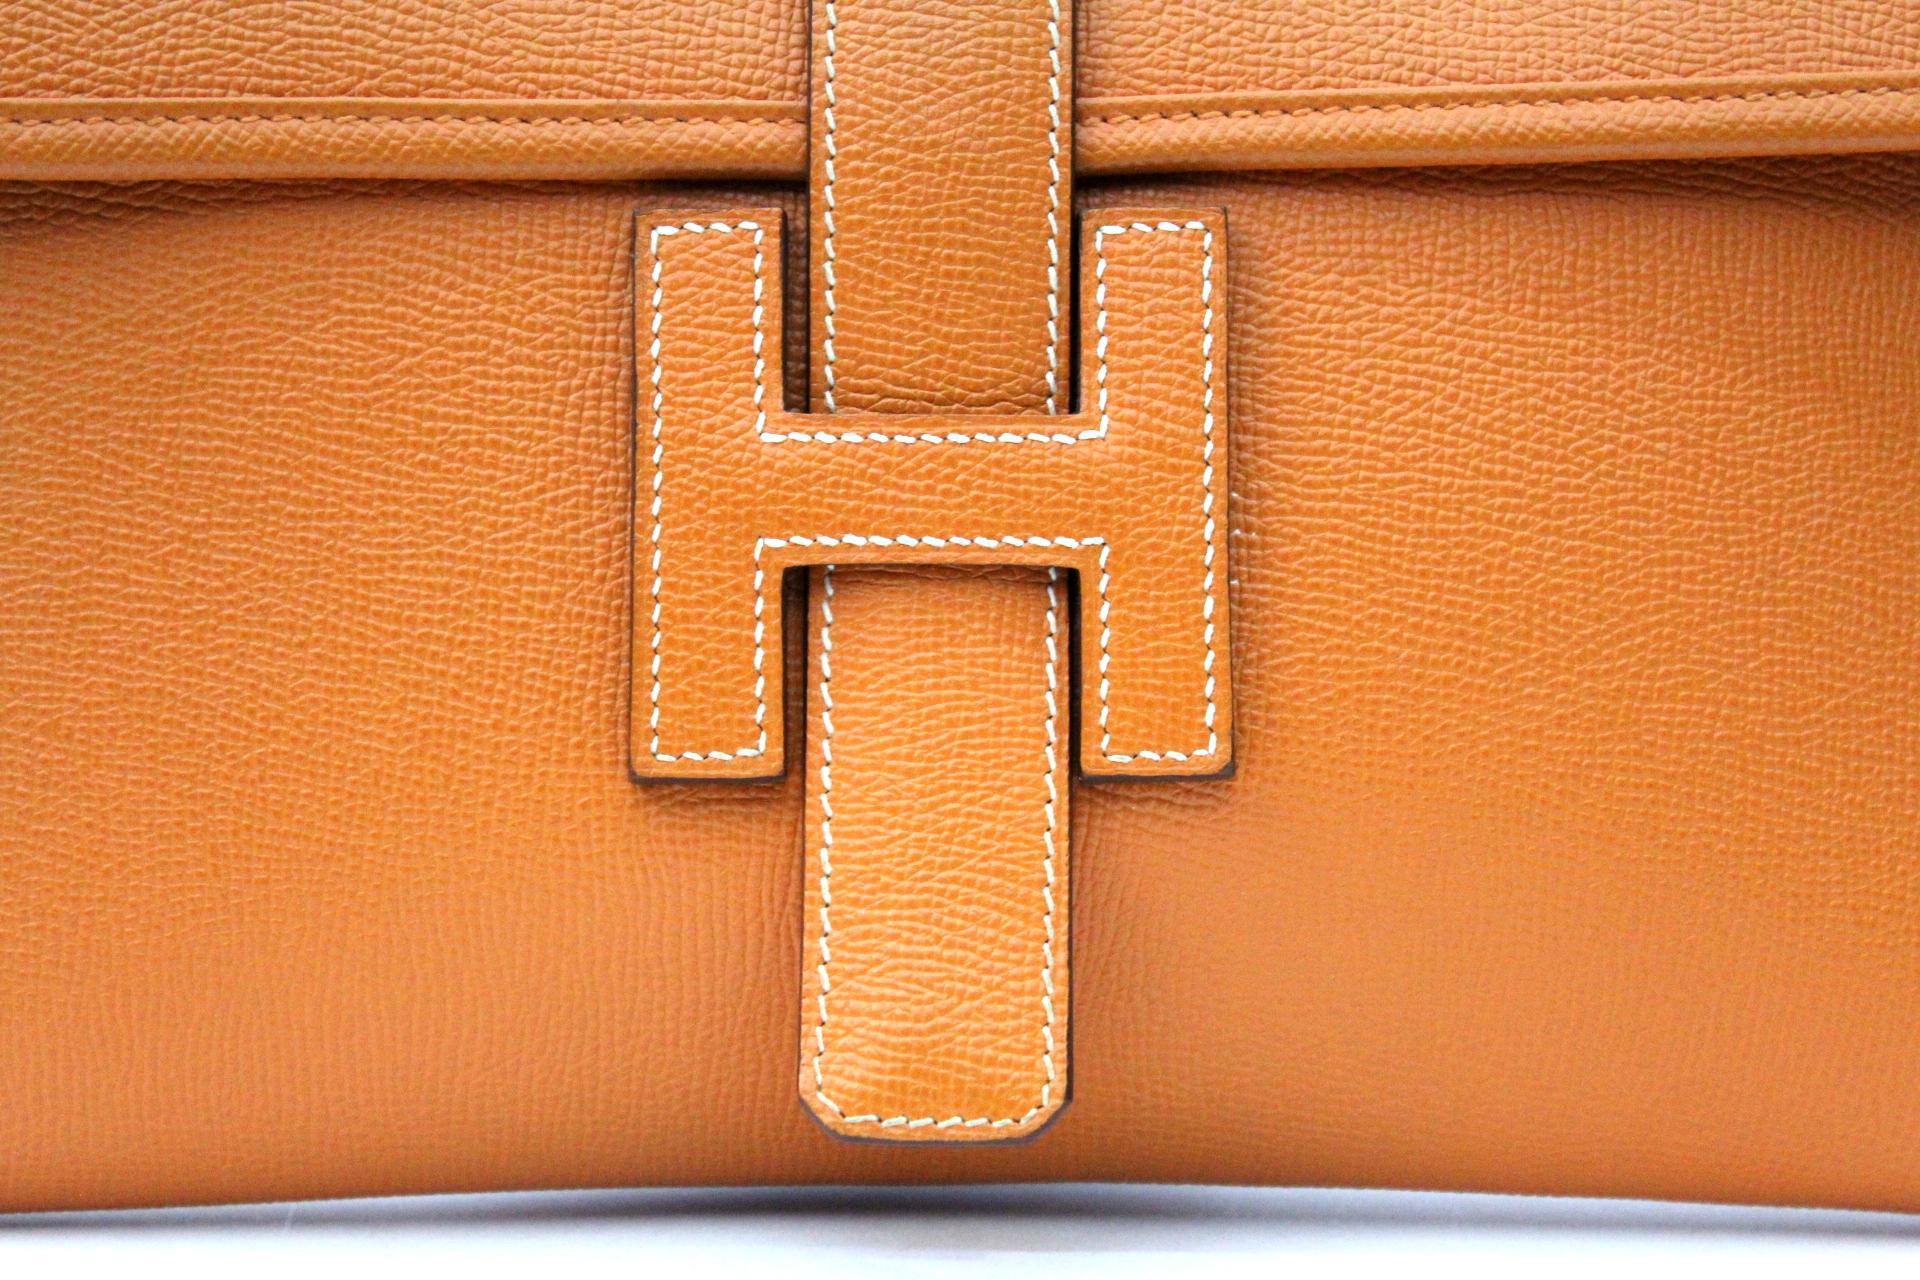 Beautiful Hermes Hermes clutch Jige model in orange Epson leather.

Year 2009